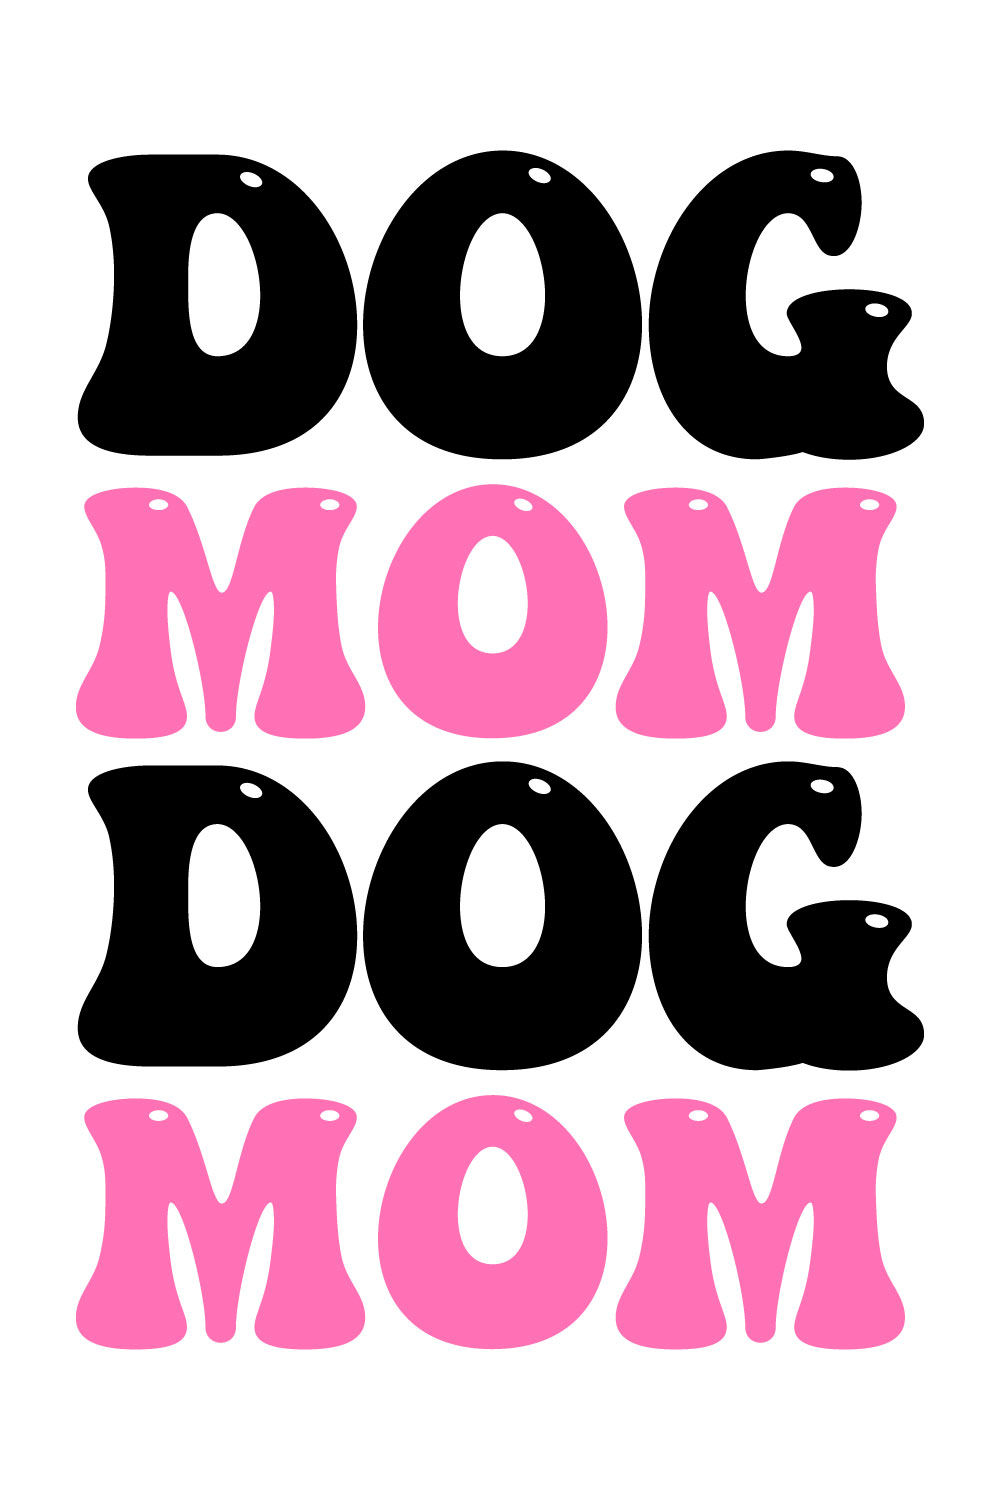 Dog MOM typography design pinterest preview image.